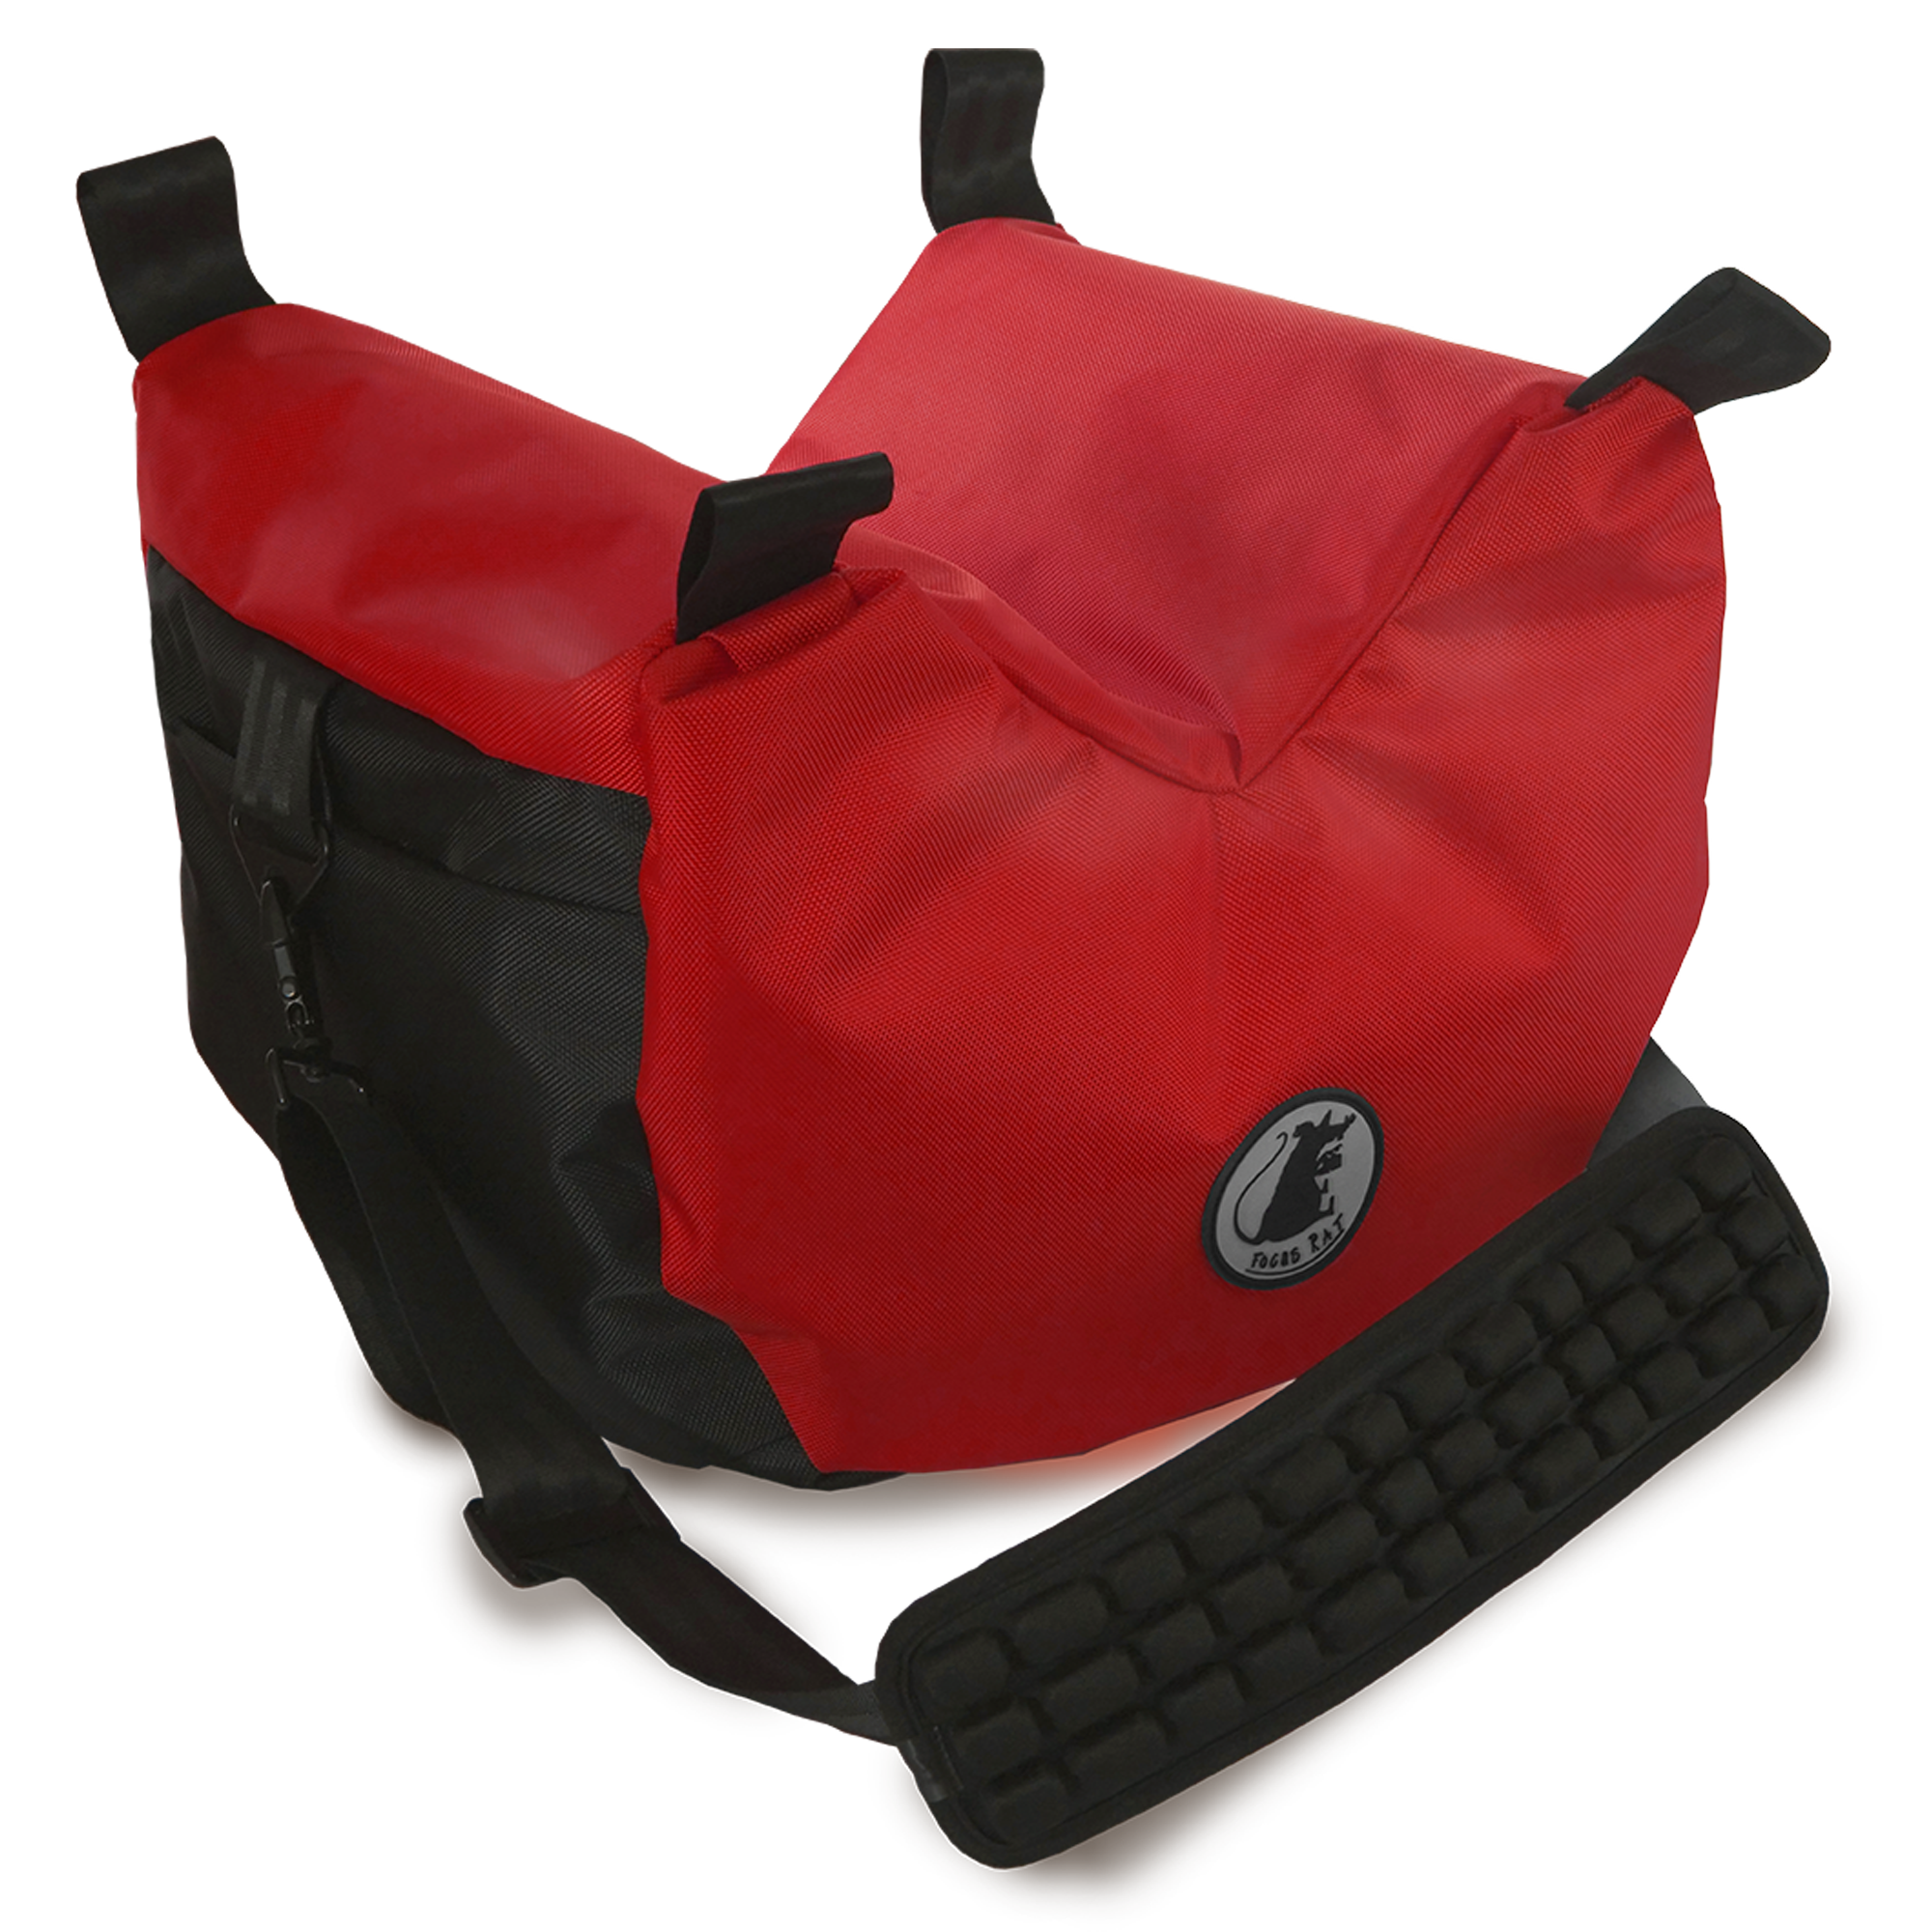 Cine Saddle like Steady Bag Large Ruby Red color Part Air Compress Shoulder Pad